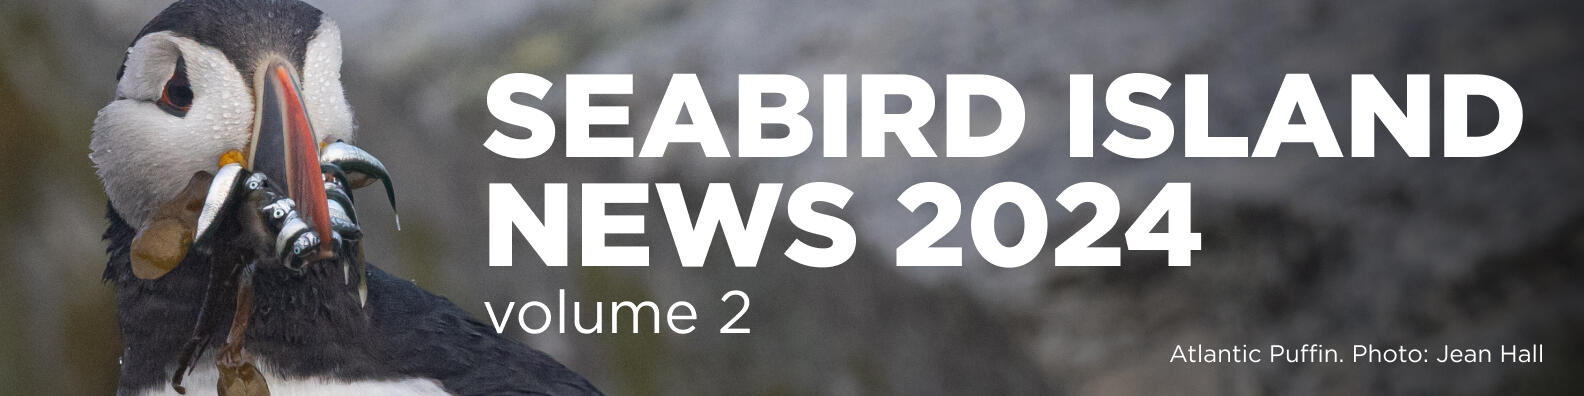 Seabird Island News Banner - Volume 02